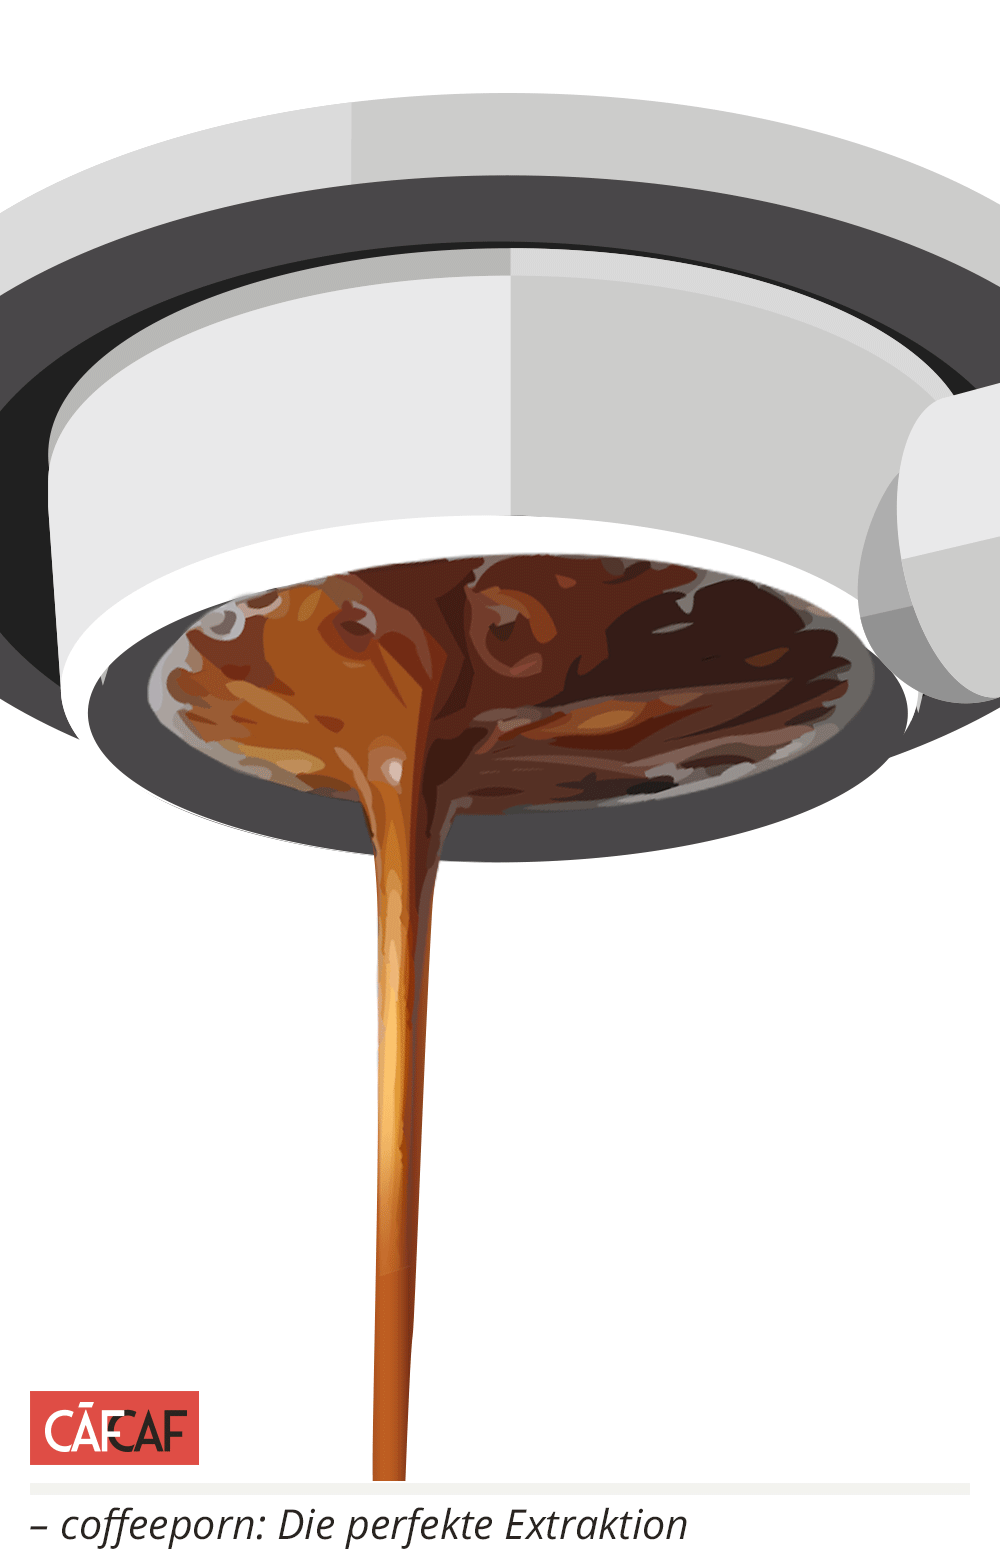 Coffeeporn: vollständige Extraktion. CafCaf – Kaffee & Blog, Kaffeeblog